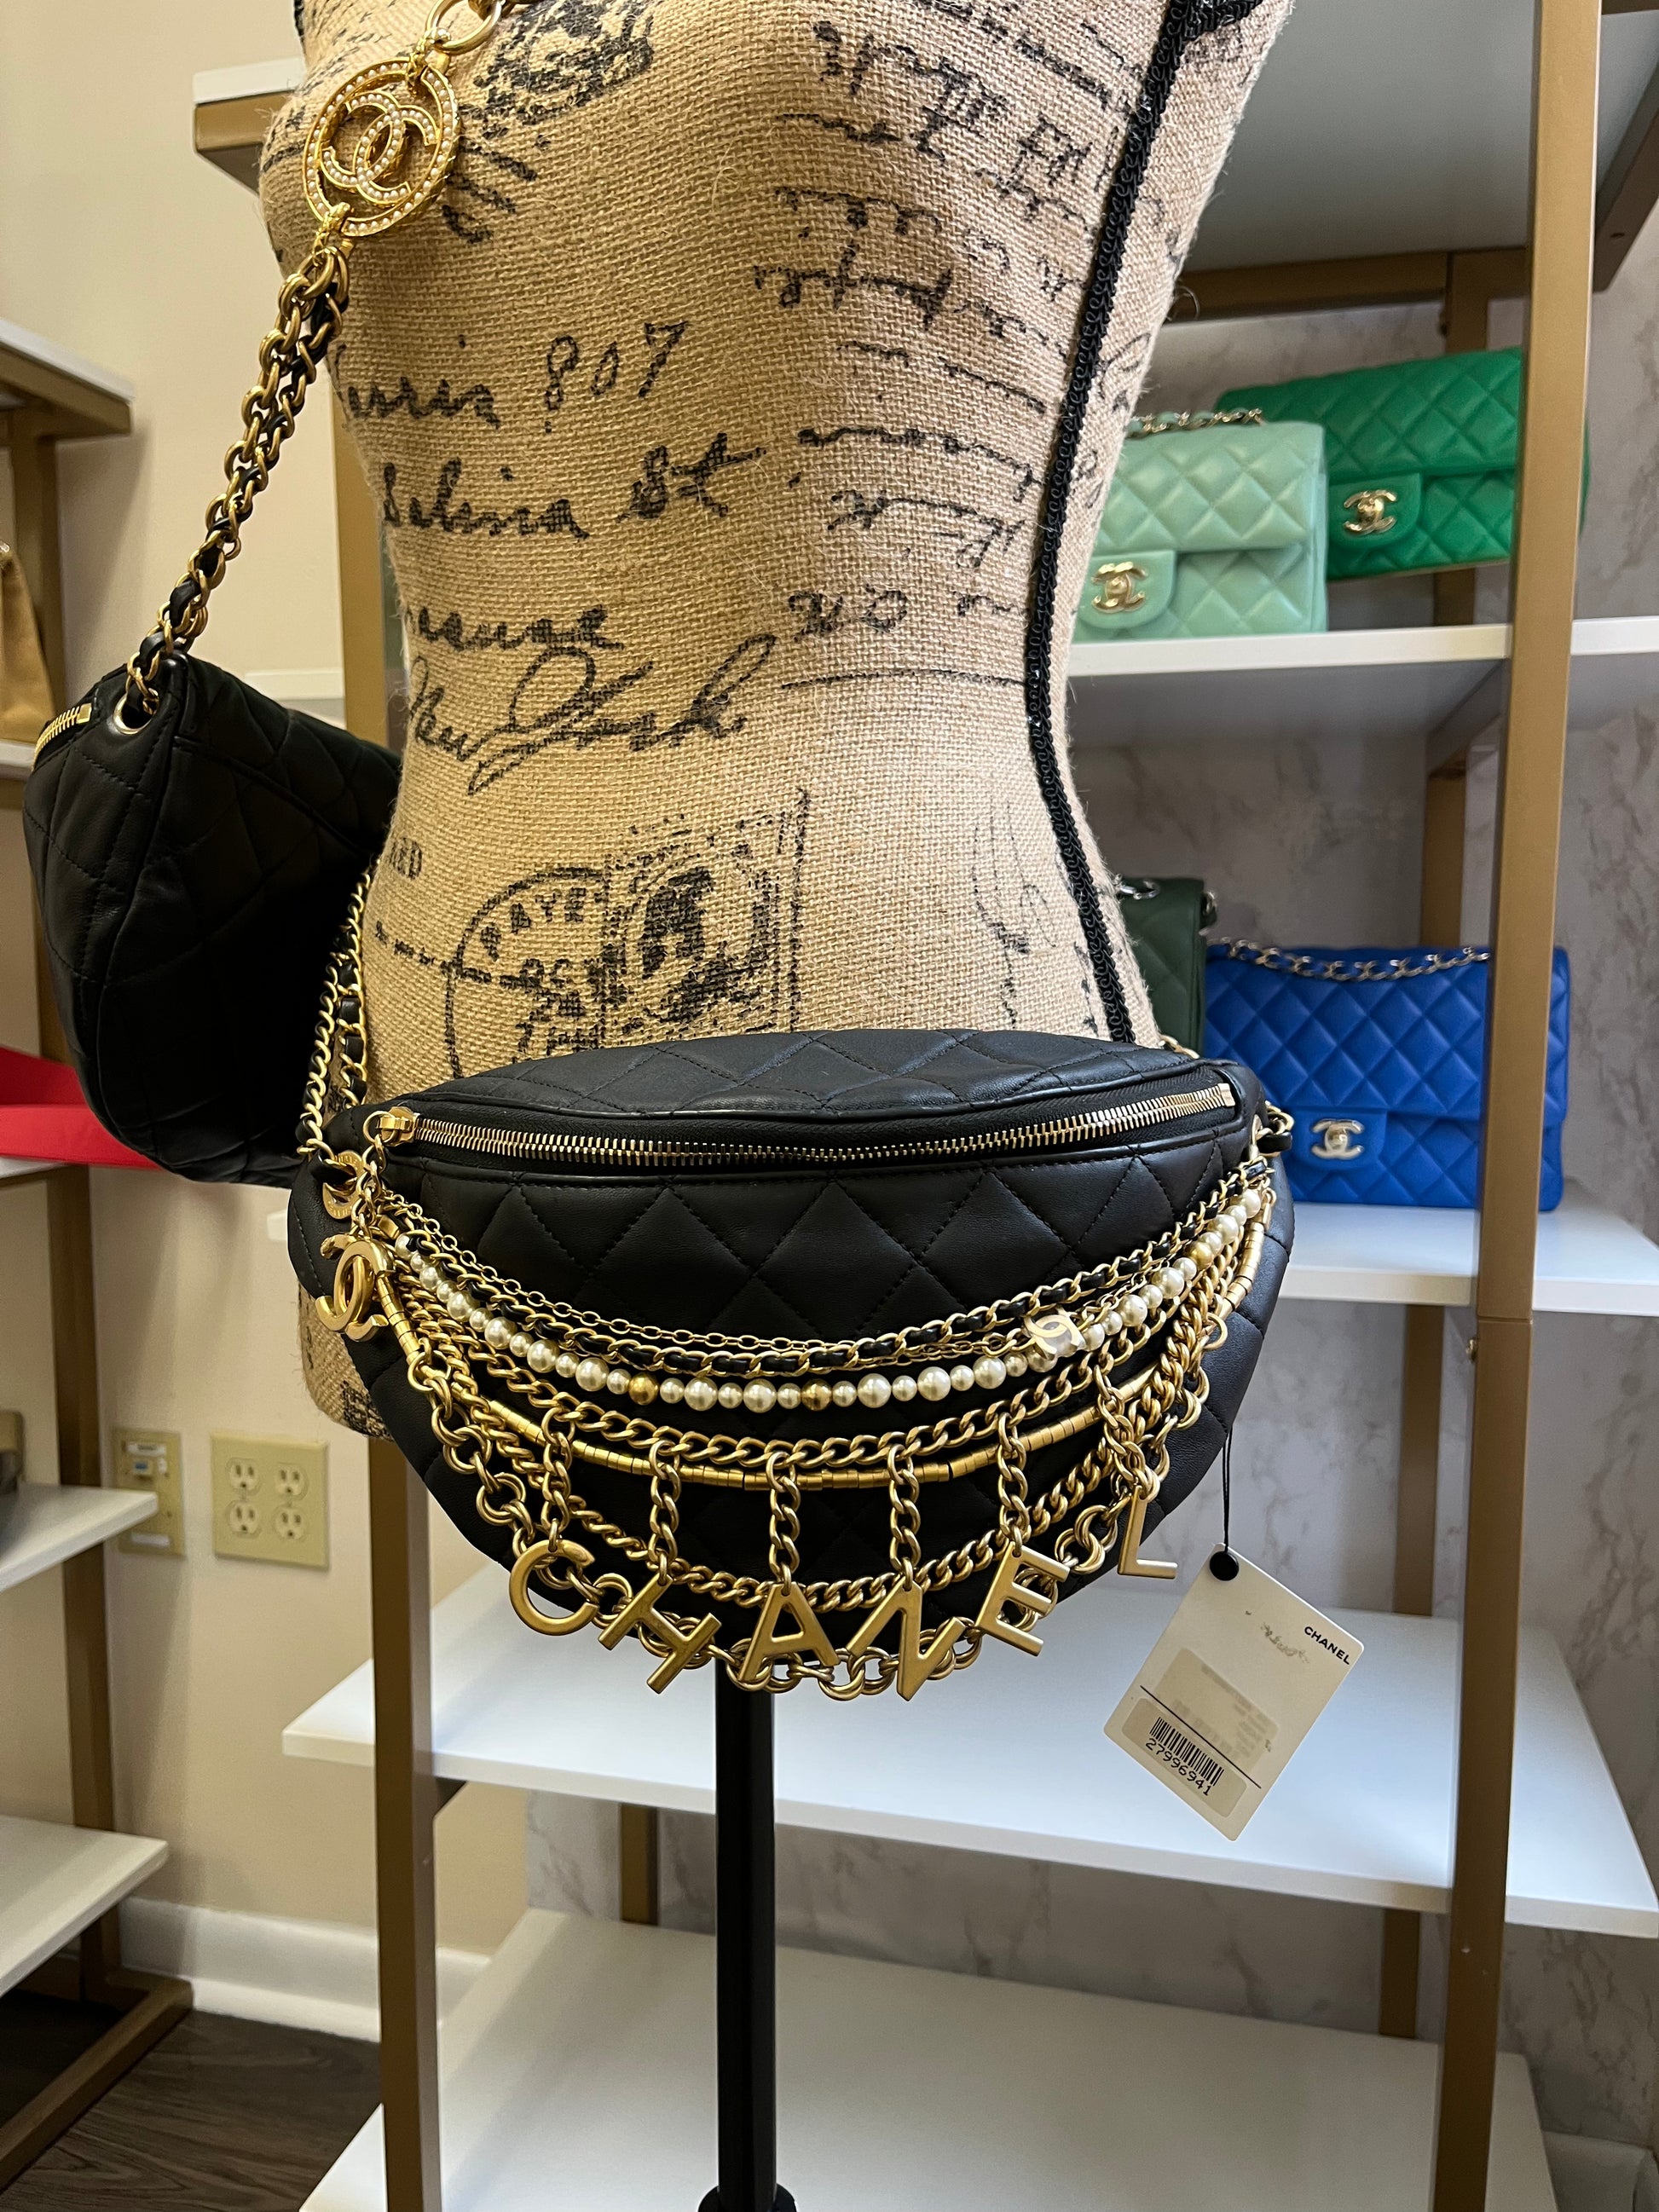 Pristine Chanel CC In Love Gold Heart Belt Bag GHW 67562 For